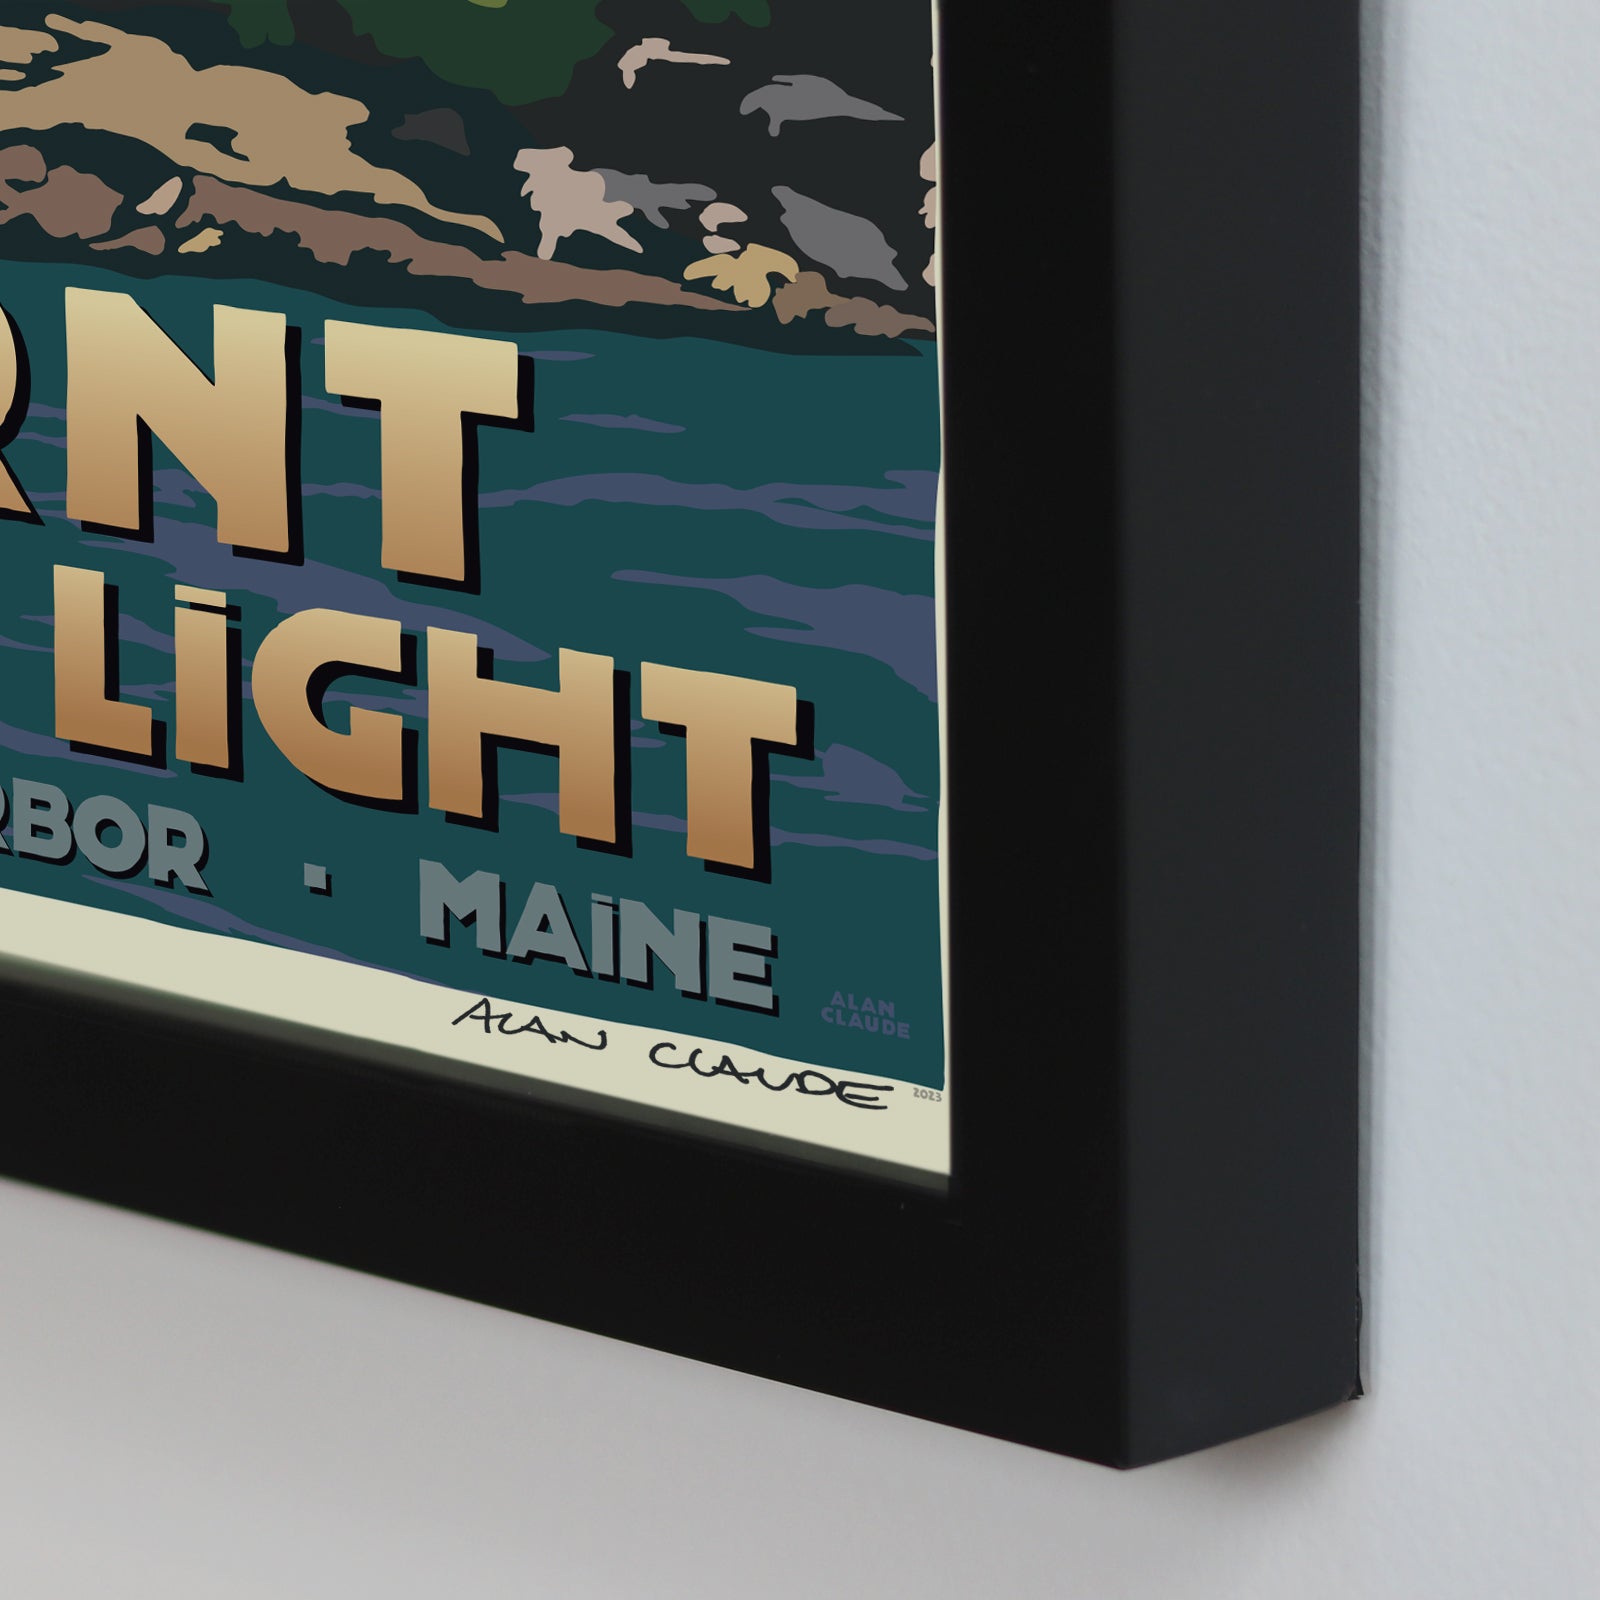 Burnt Island Light Art Print 18" x 24" Framed Travel Poster By Alan Claude - Maine